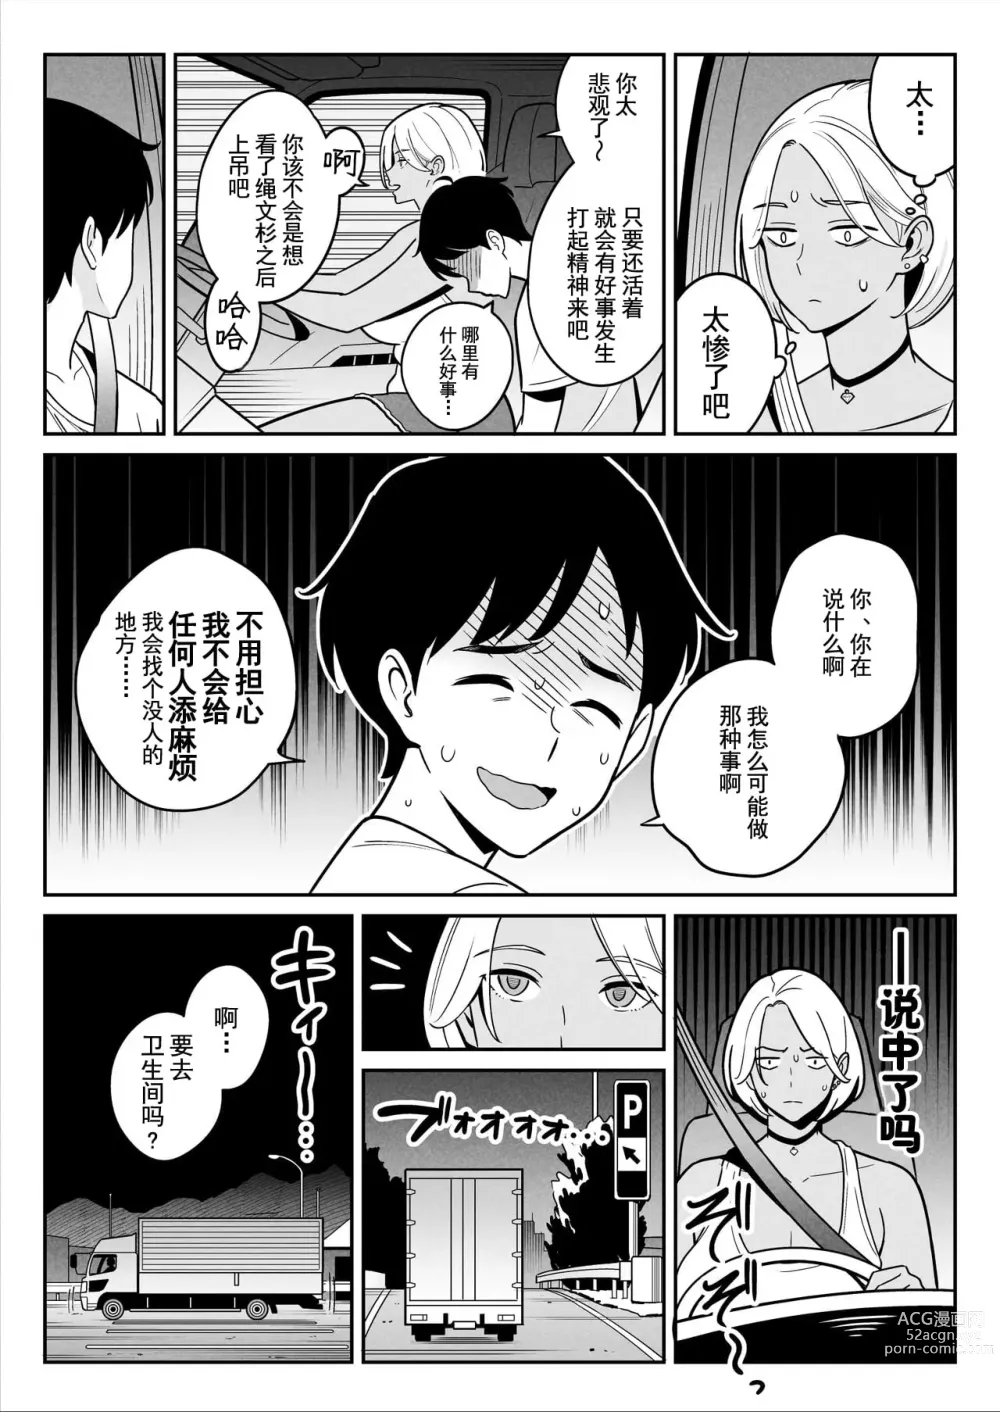 Page 15 of manga Muchi Niku Heaven de Pan Pan Pan